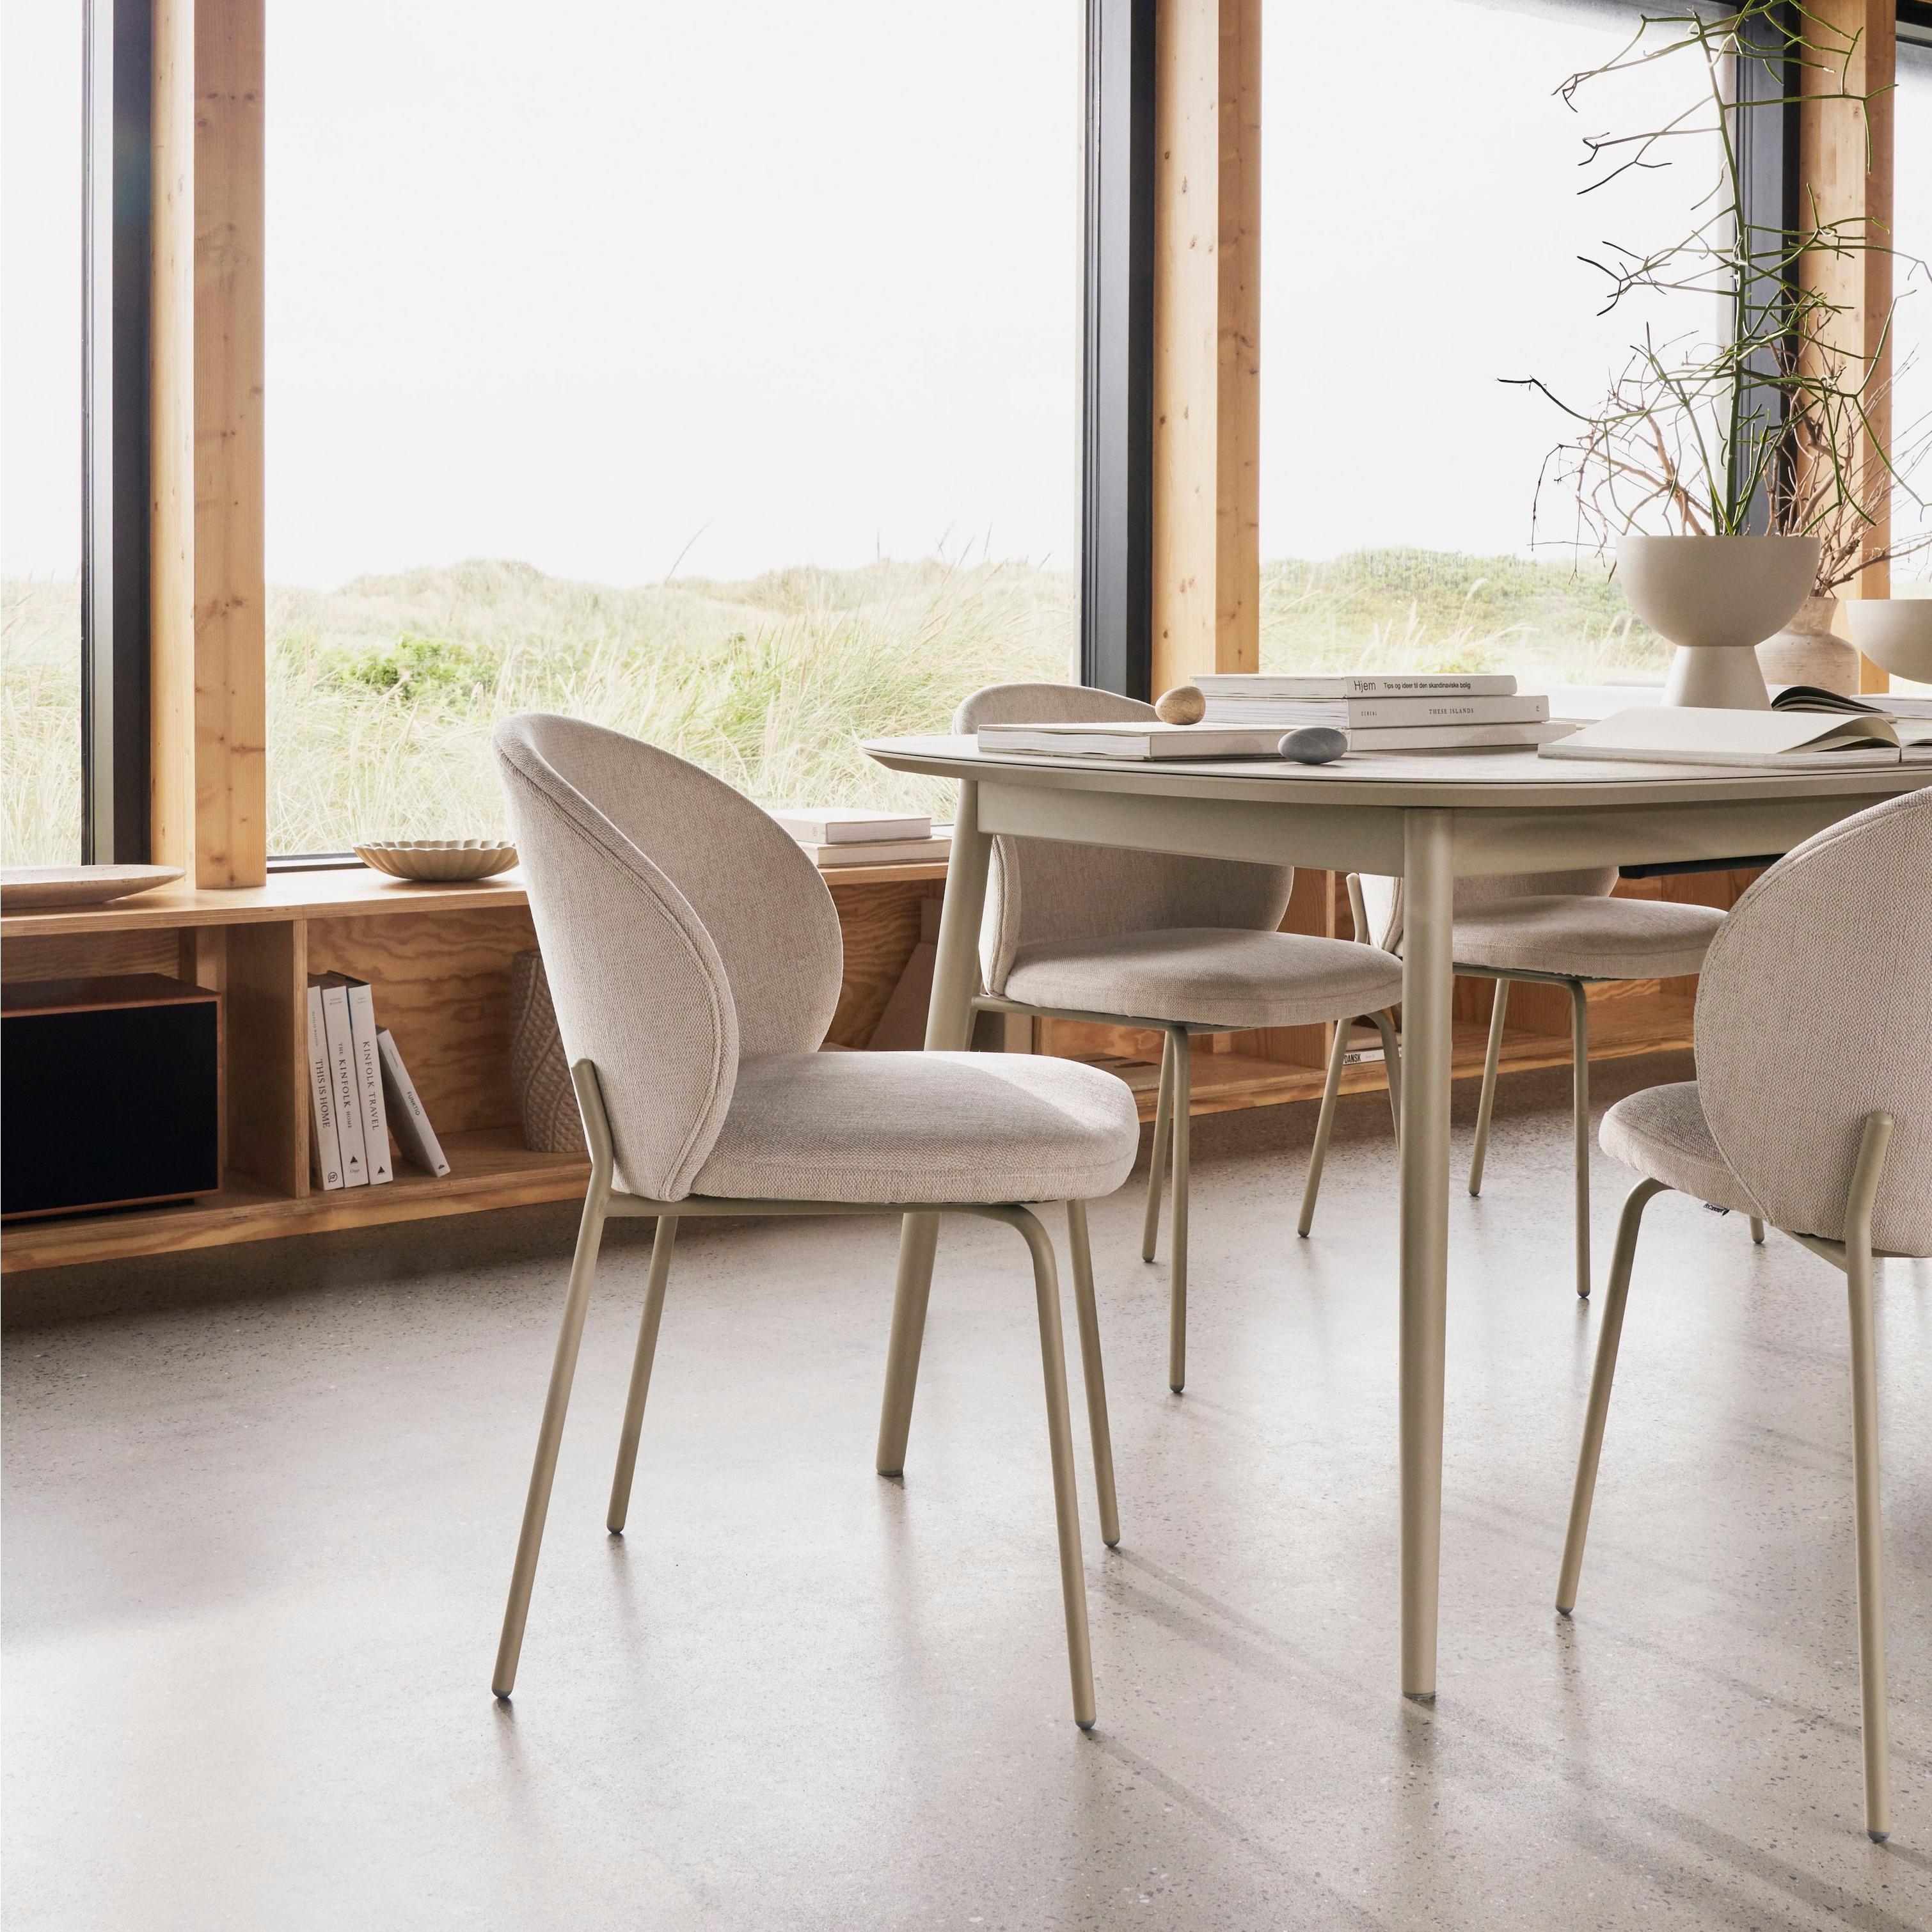 Kingston 餐桌和 Princeton 餐椅打造现代阳光房餐厅。